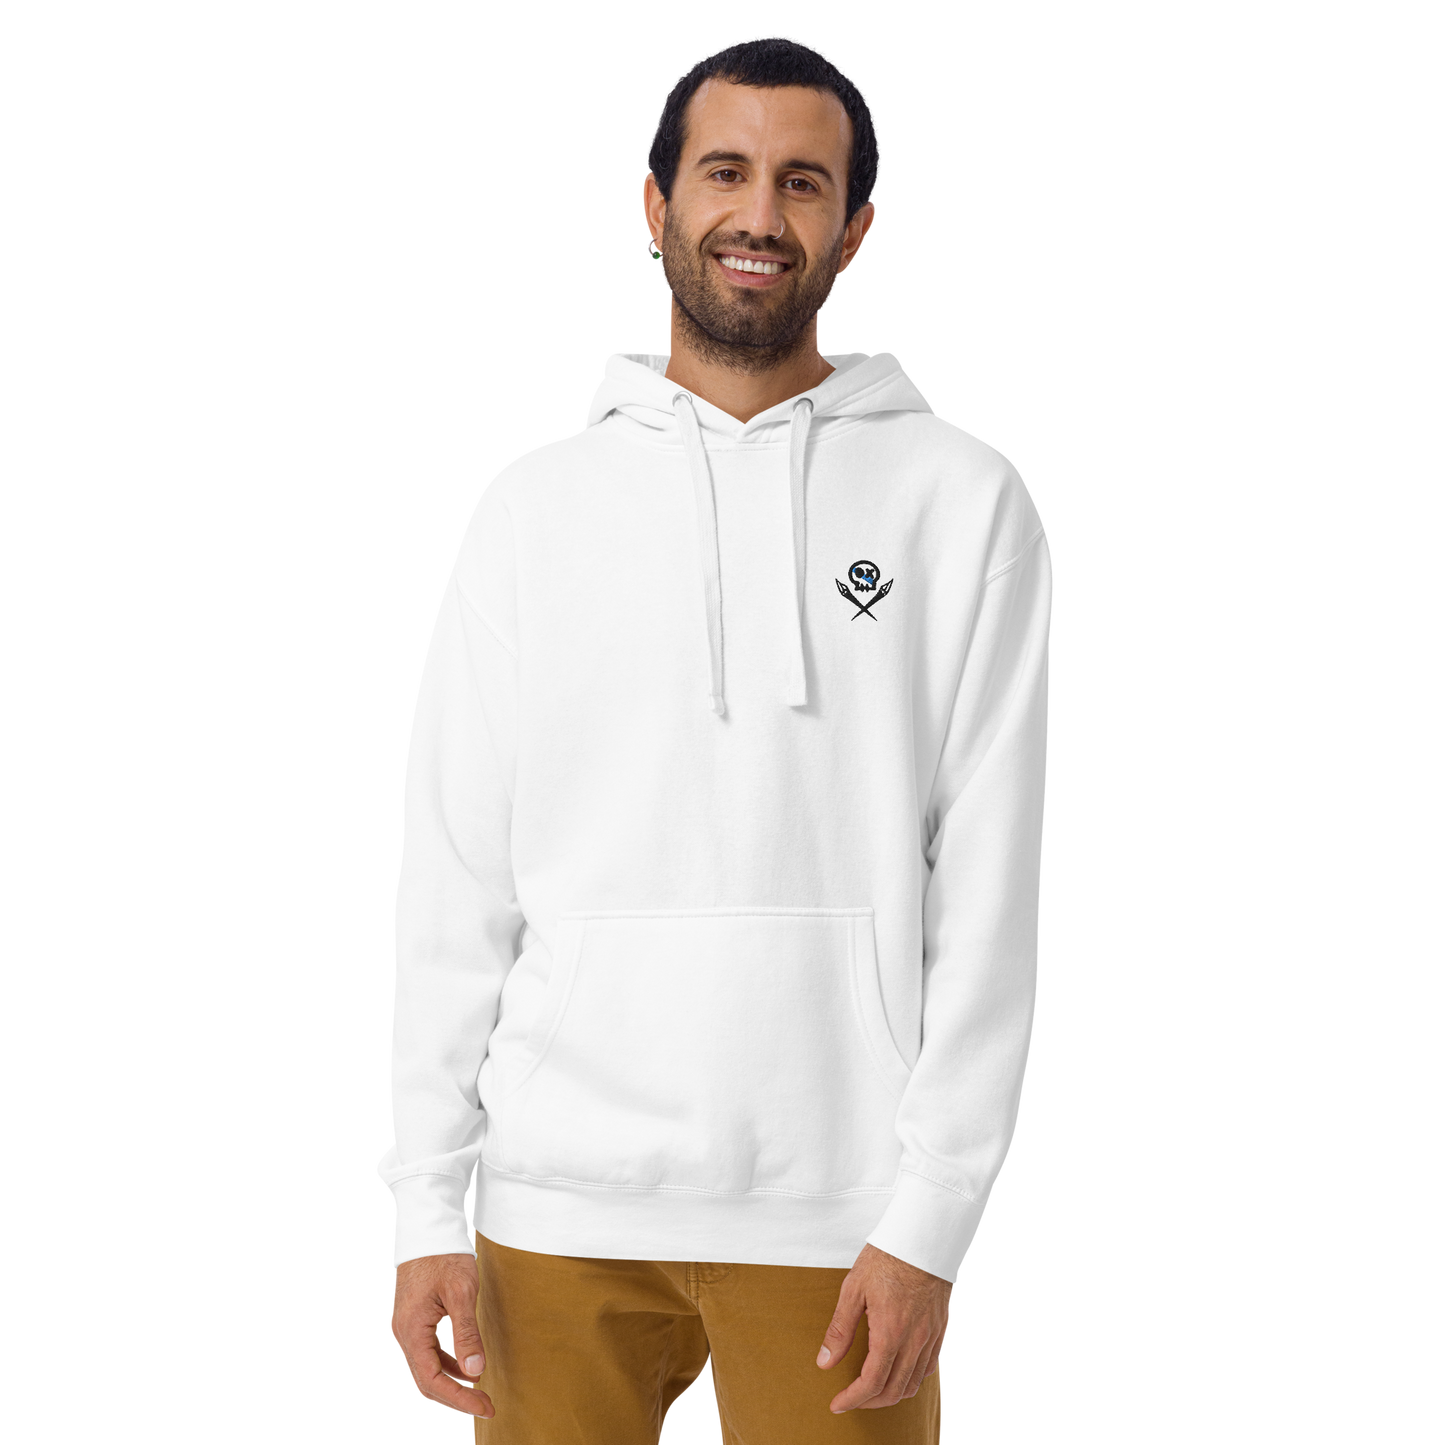 Sweatshirt # TORRE // Premium Hoodie with Hood and Pocket // Unisex // Embroidered